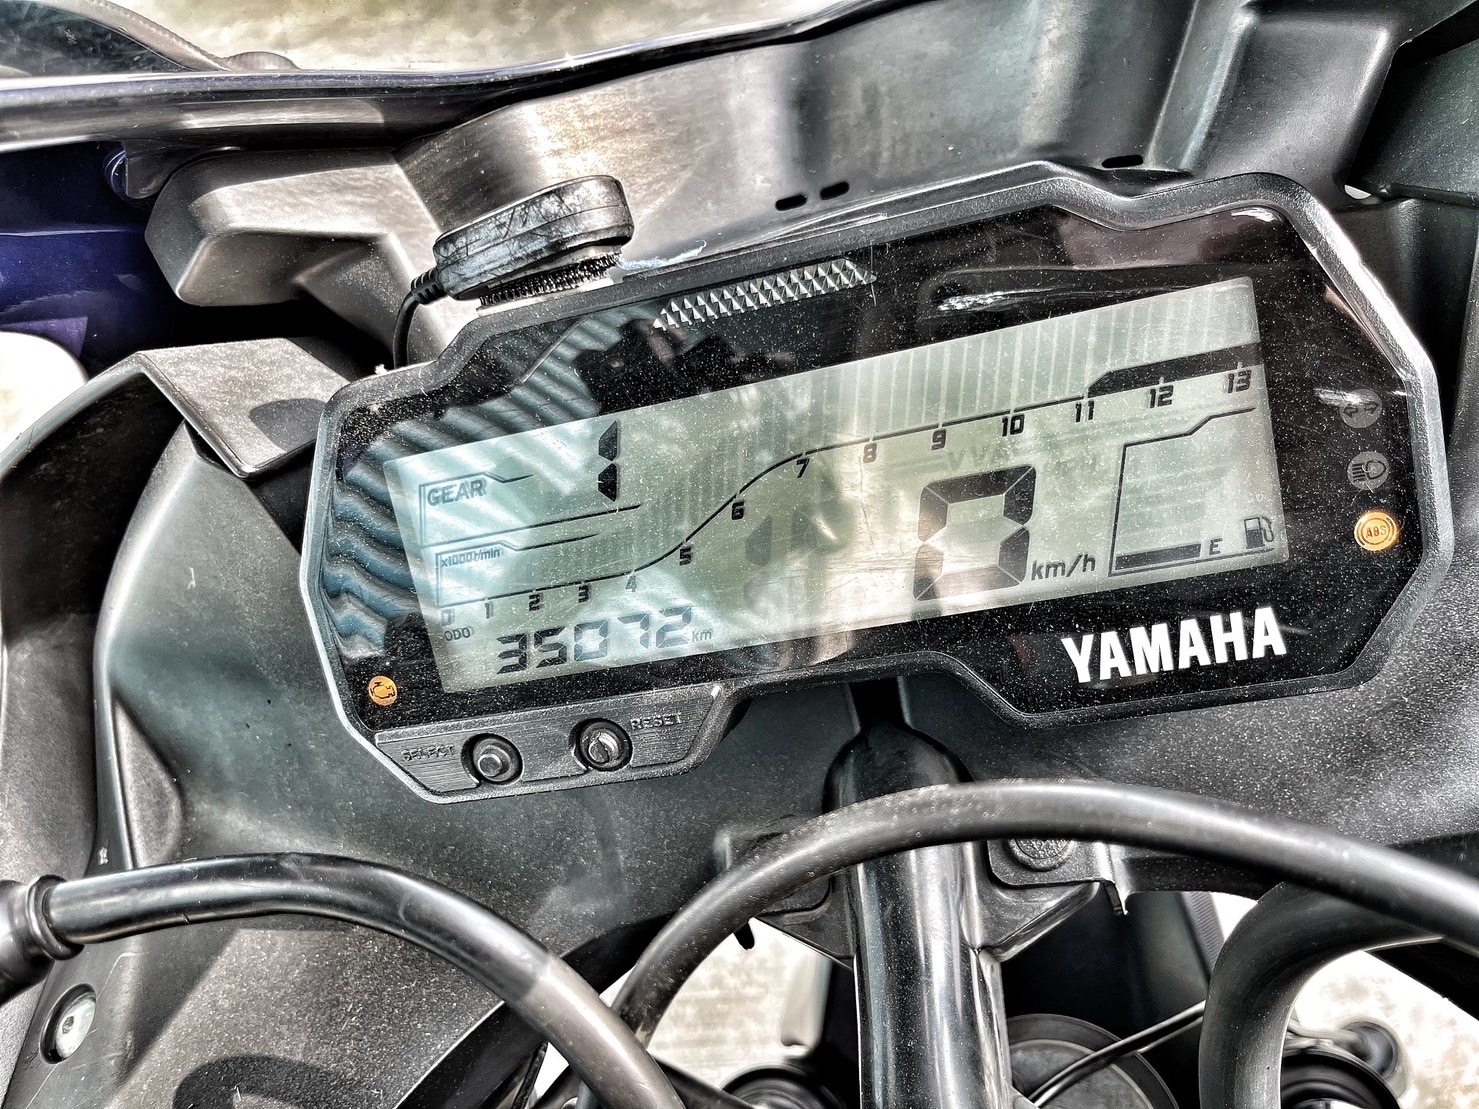 YAMAHA YZF-R15 - 中古/二手車出售中 ABS版 行車記錄器 基本改裝 小資族二手重機買賣 | 小資族二手重機買賣